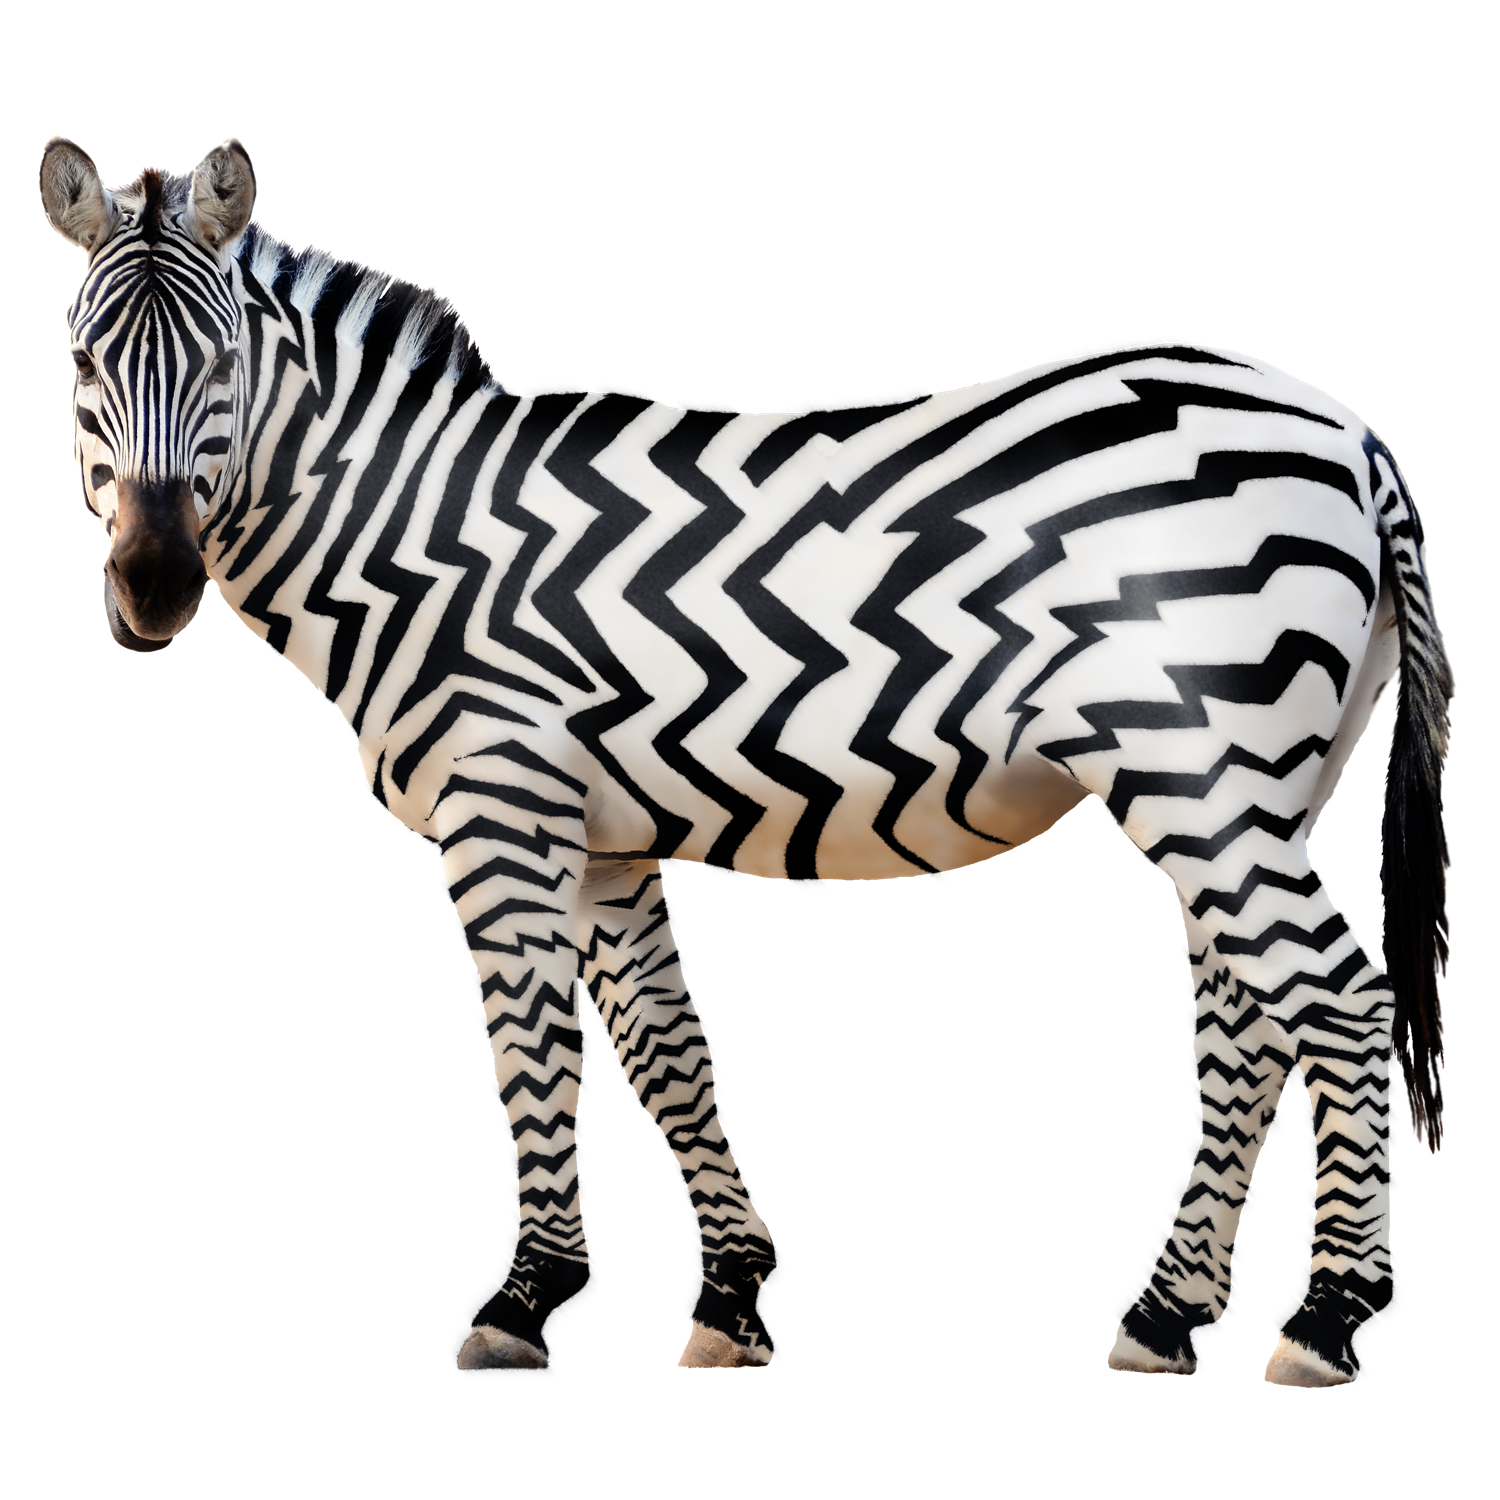 Zebra PNG unduh gratis